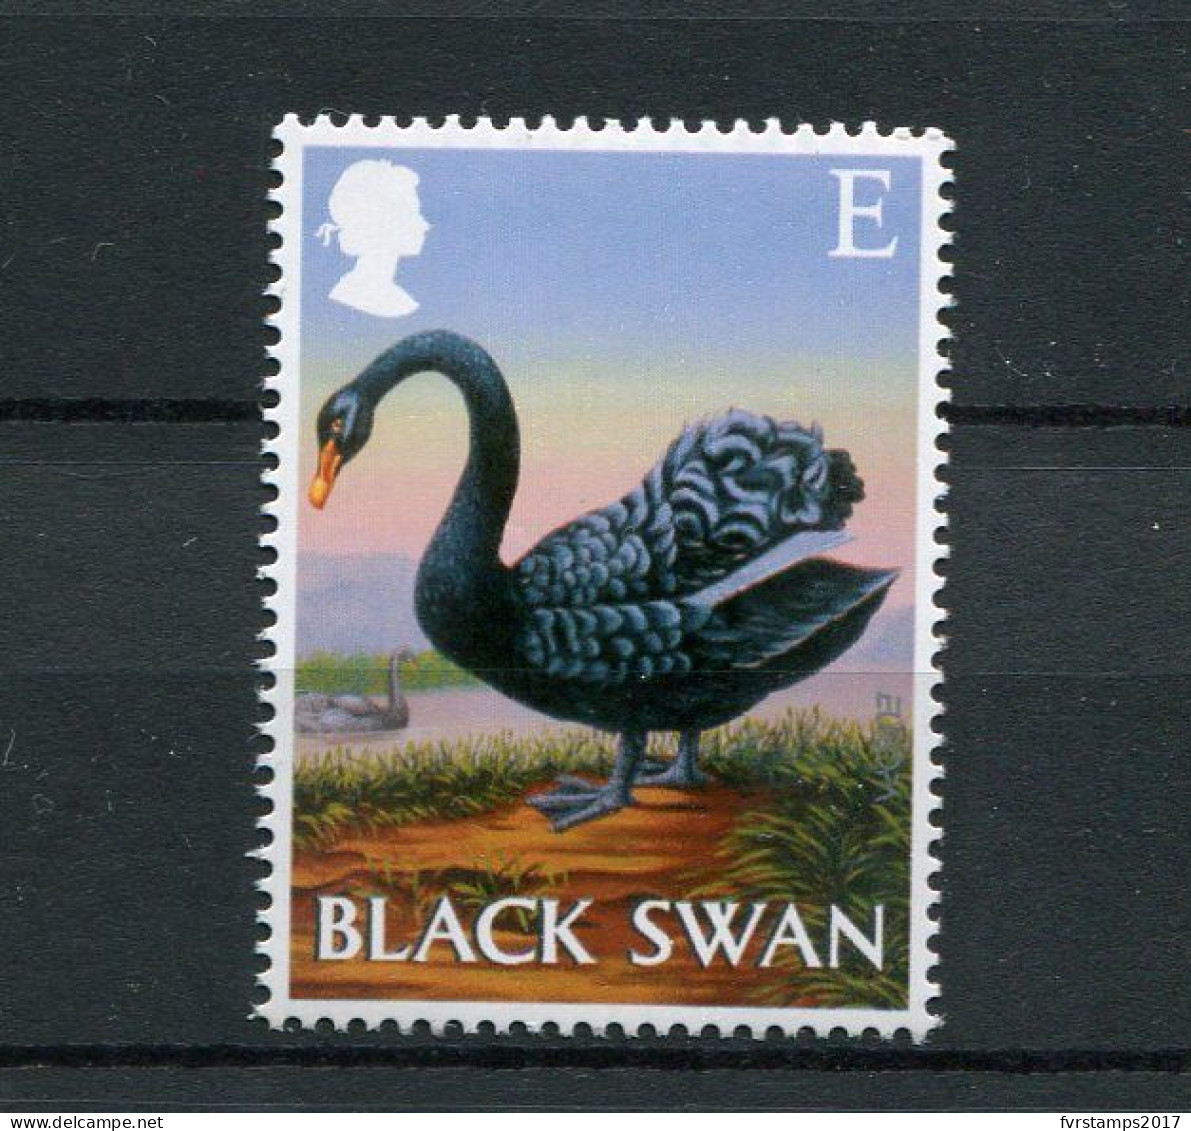 UK Great Britain - 2003 - Mi 2148 - MNH ** - Black Swan - Birds Vogels Oiseaux Fauna - Cygnes